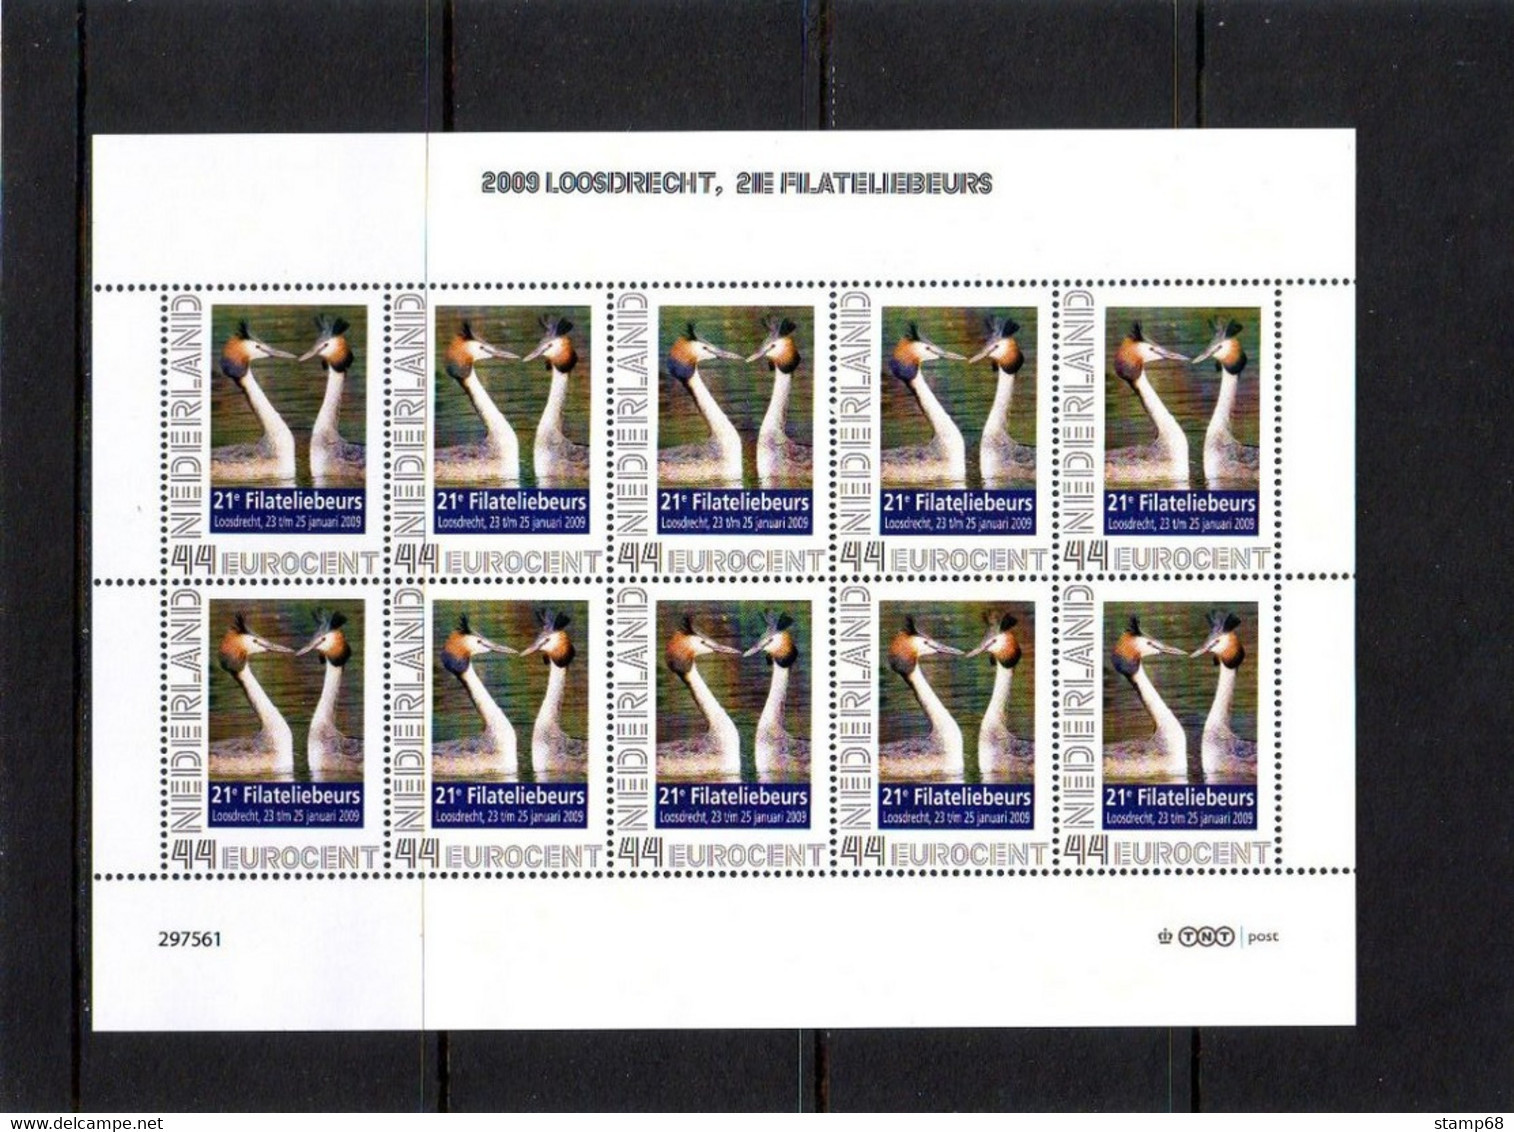 Nederland NVPH 2563C1 Vel Persoonlijke Zegels 21e Filateliebeurs Loosdrecht 2009 MNH Postfris - Timbres Personnalisés